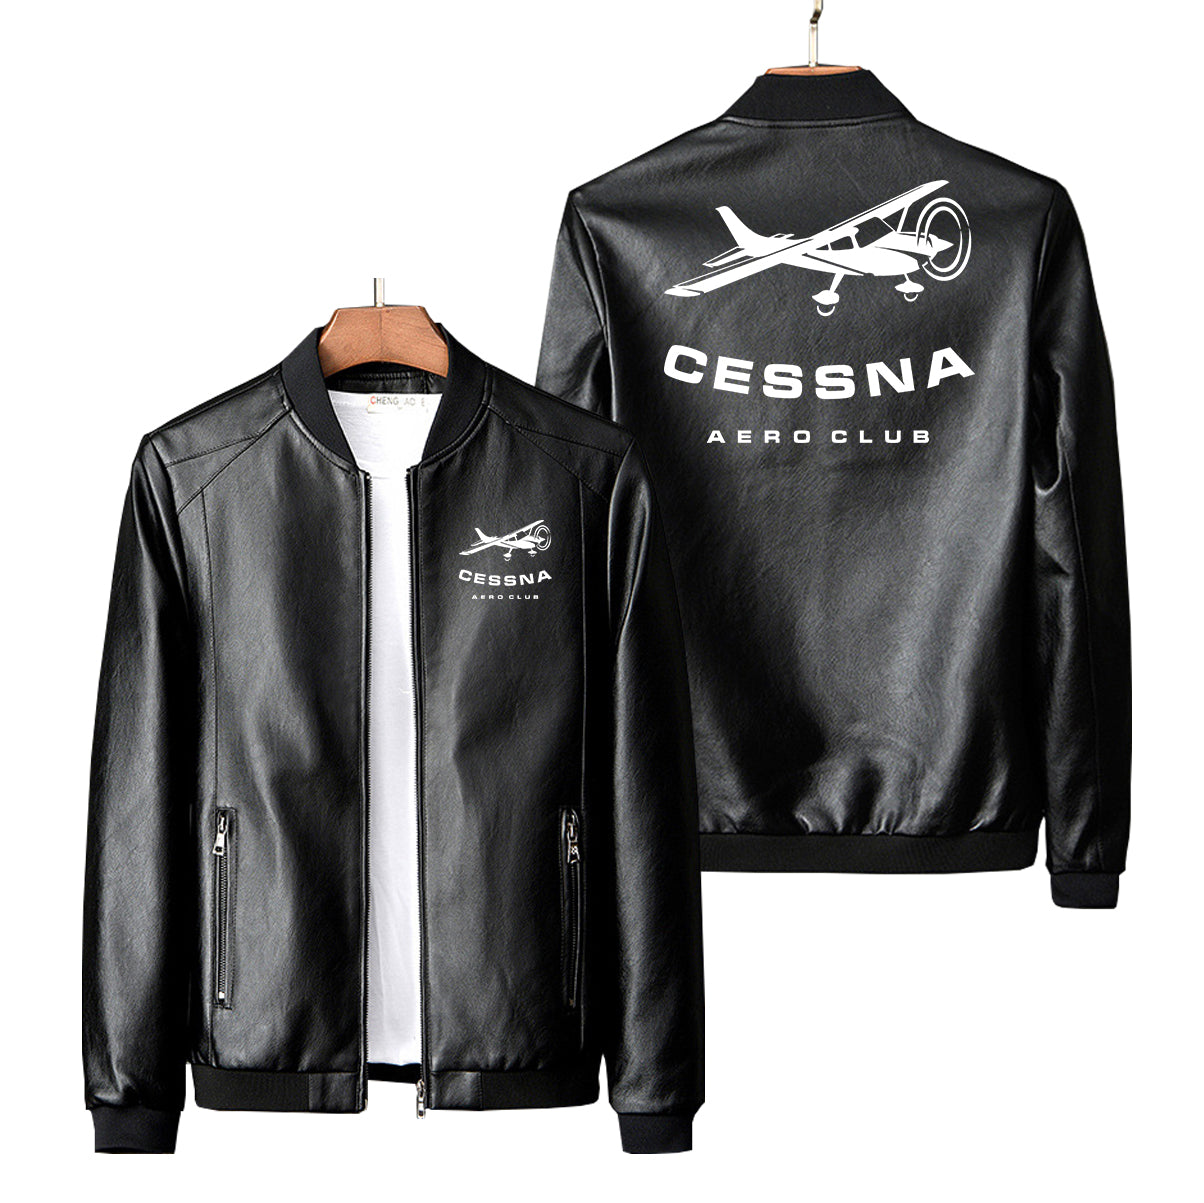 Cessna Aeroclub Designed PU Leather Jackets